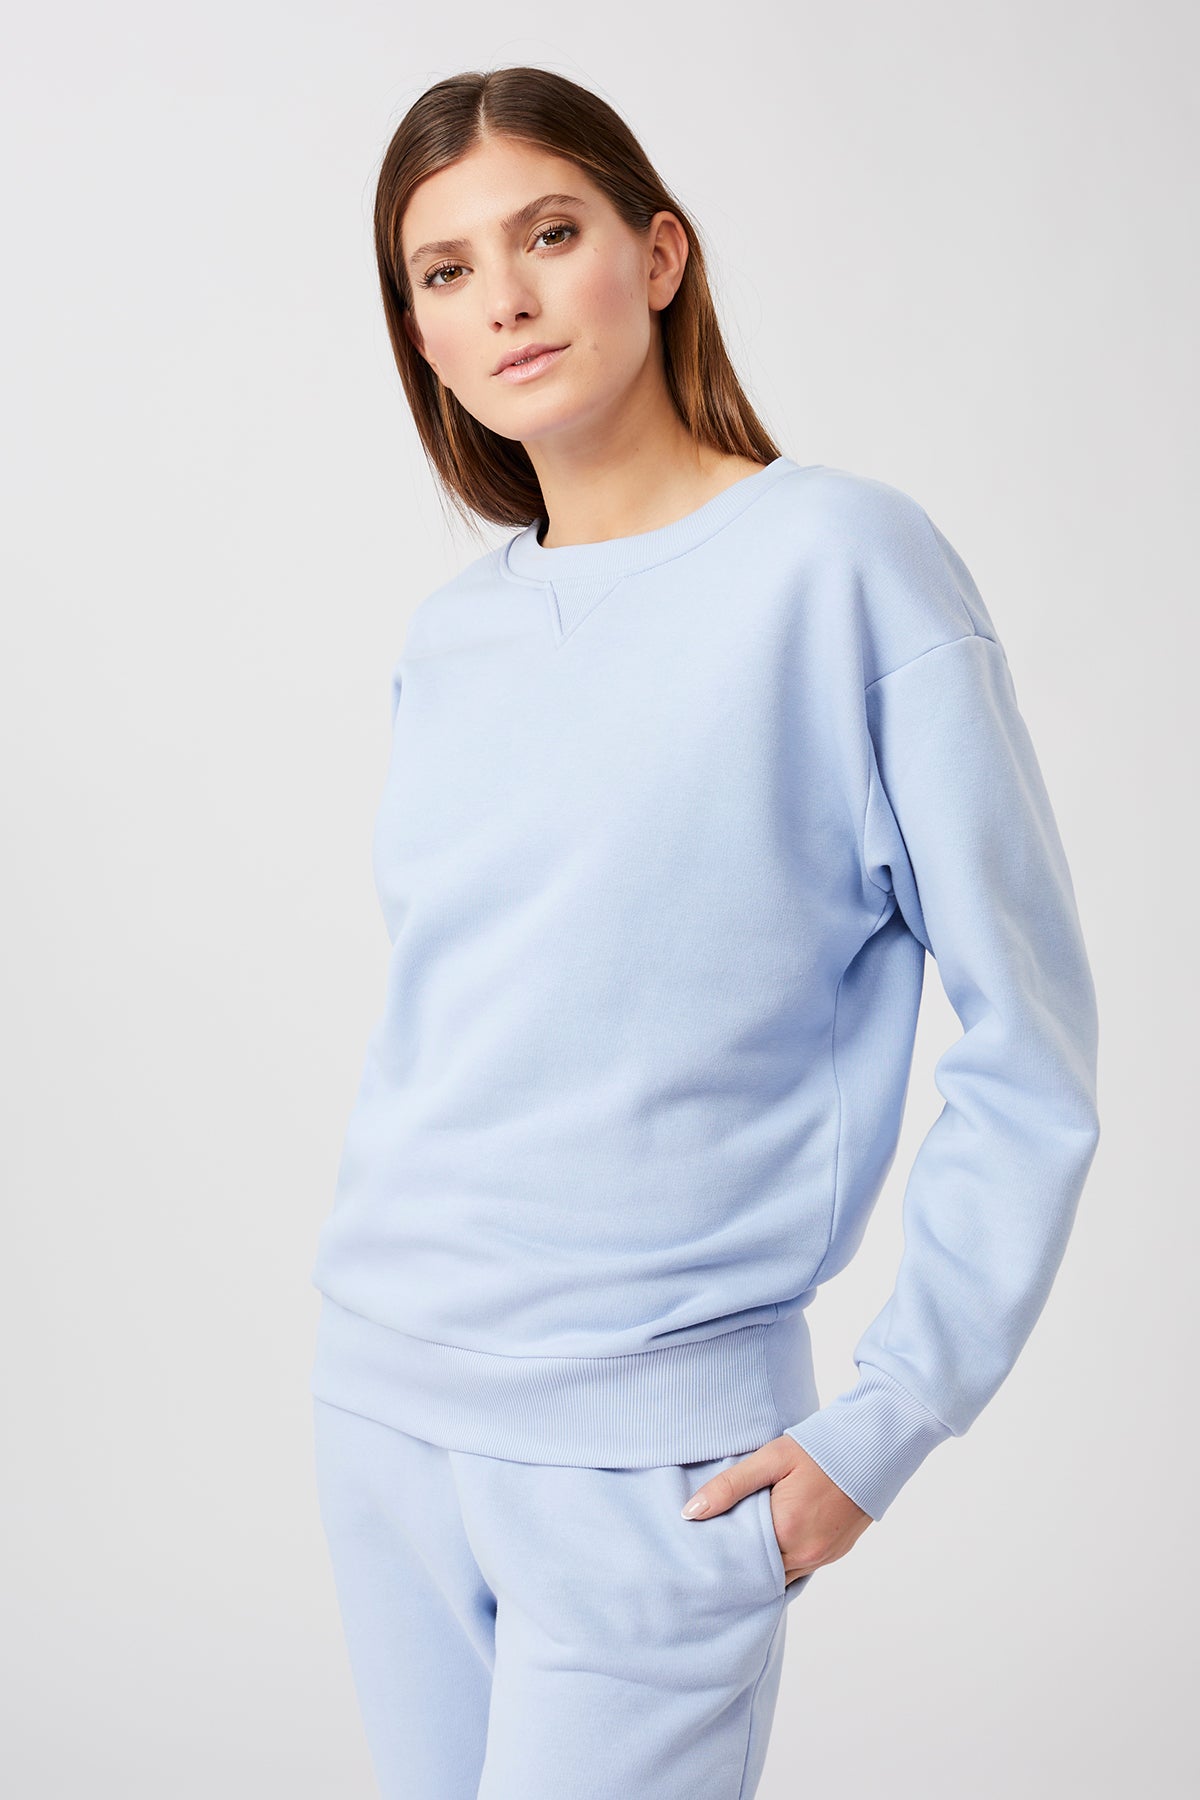 Natural Dye Sweater + Natural Dye Track Pants (Sky Blue)